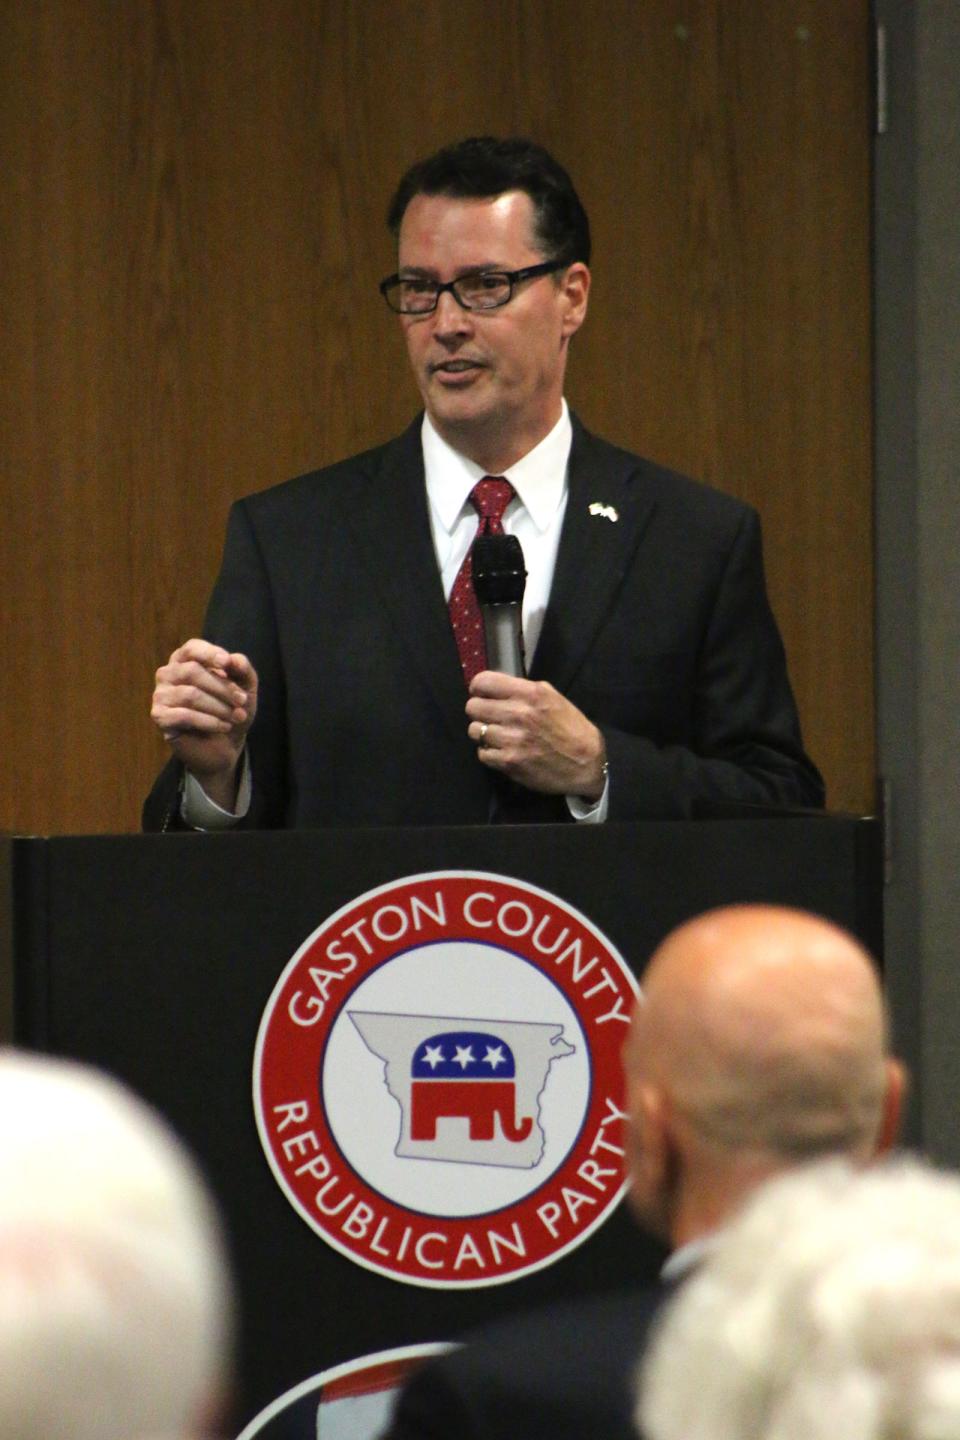 District Court Judge Craig Collins speaks at a Republican Party event in this Gazette file photograph.